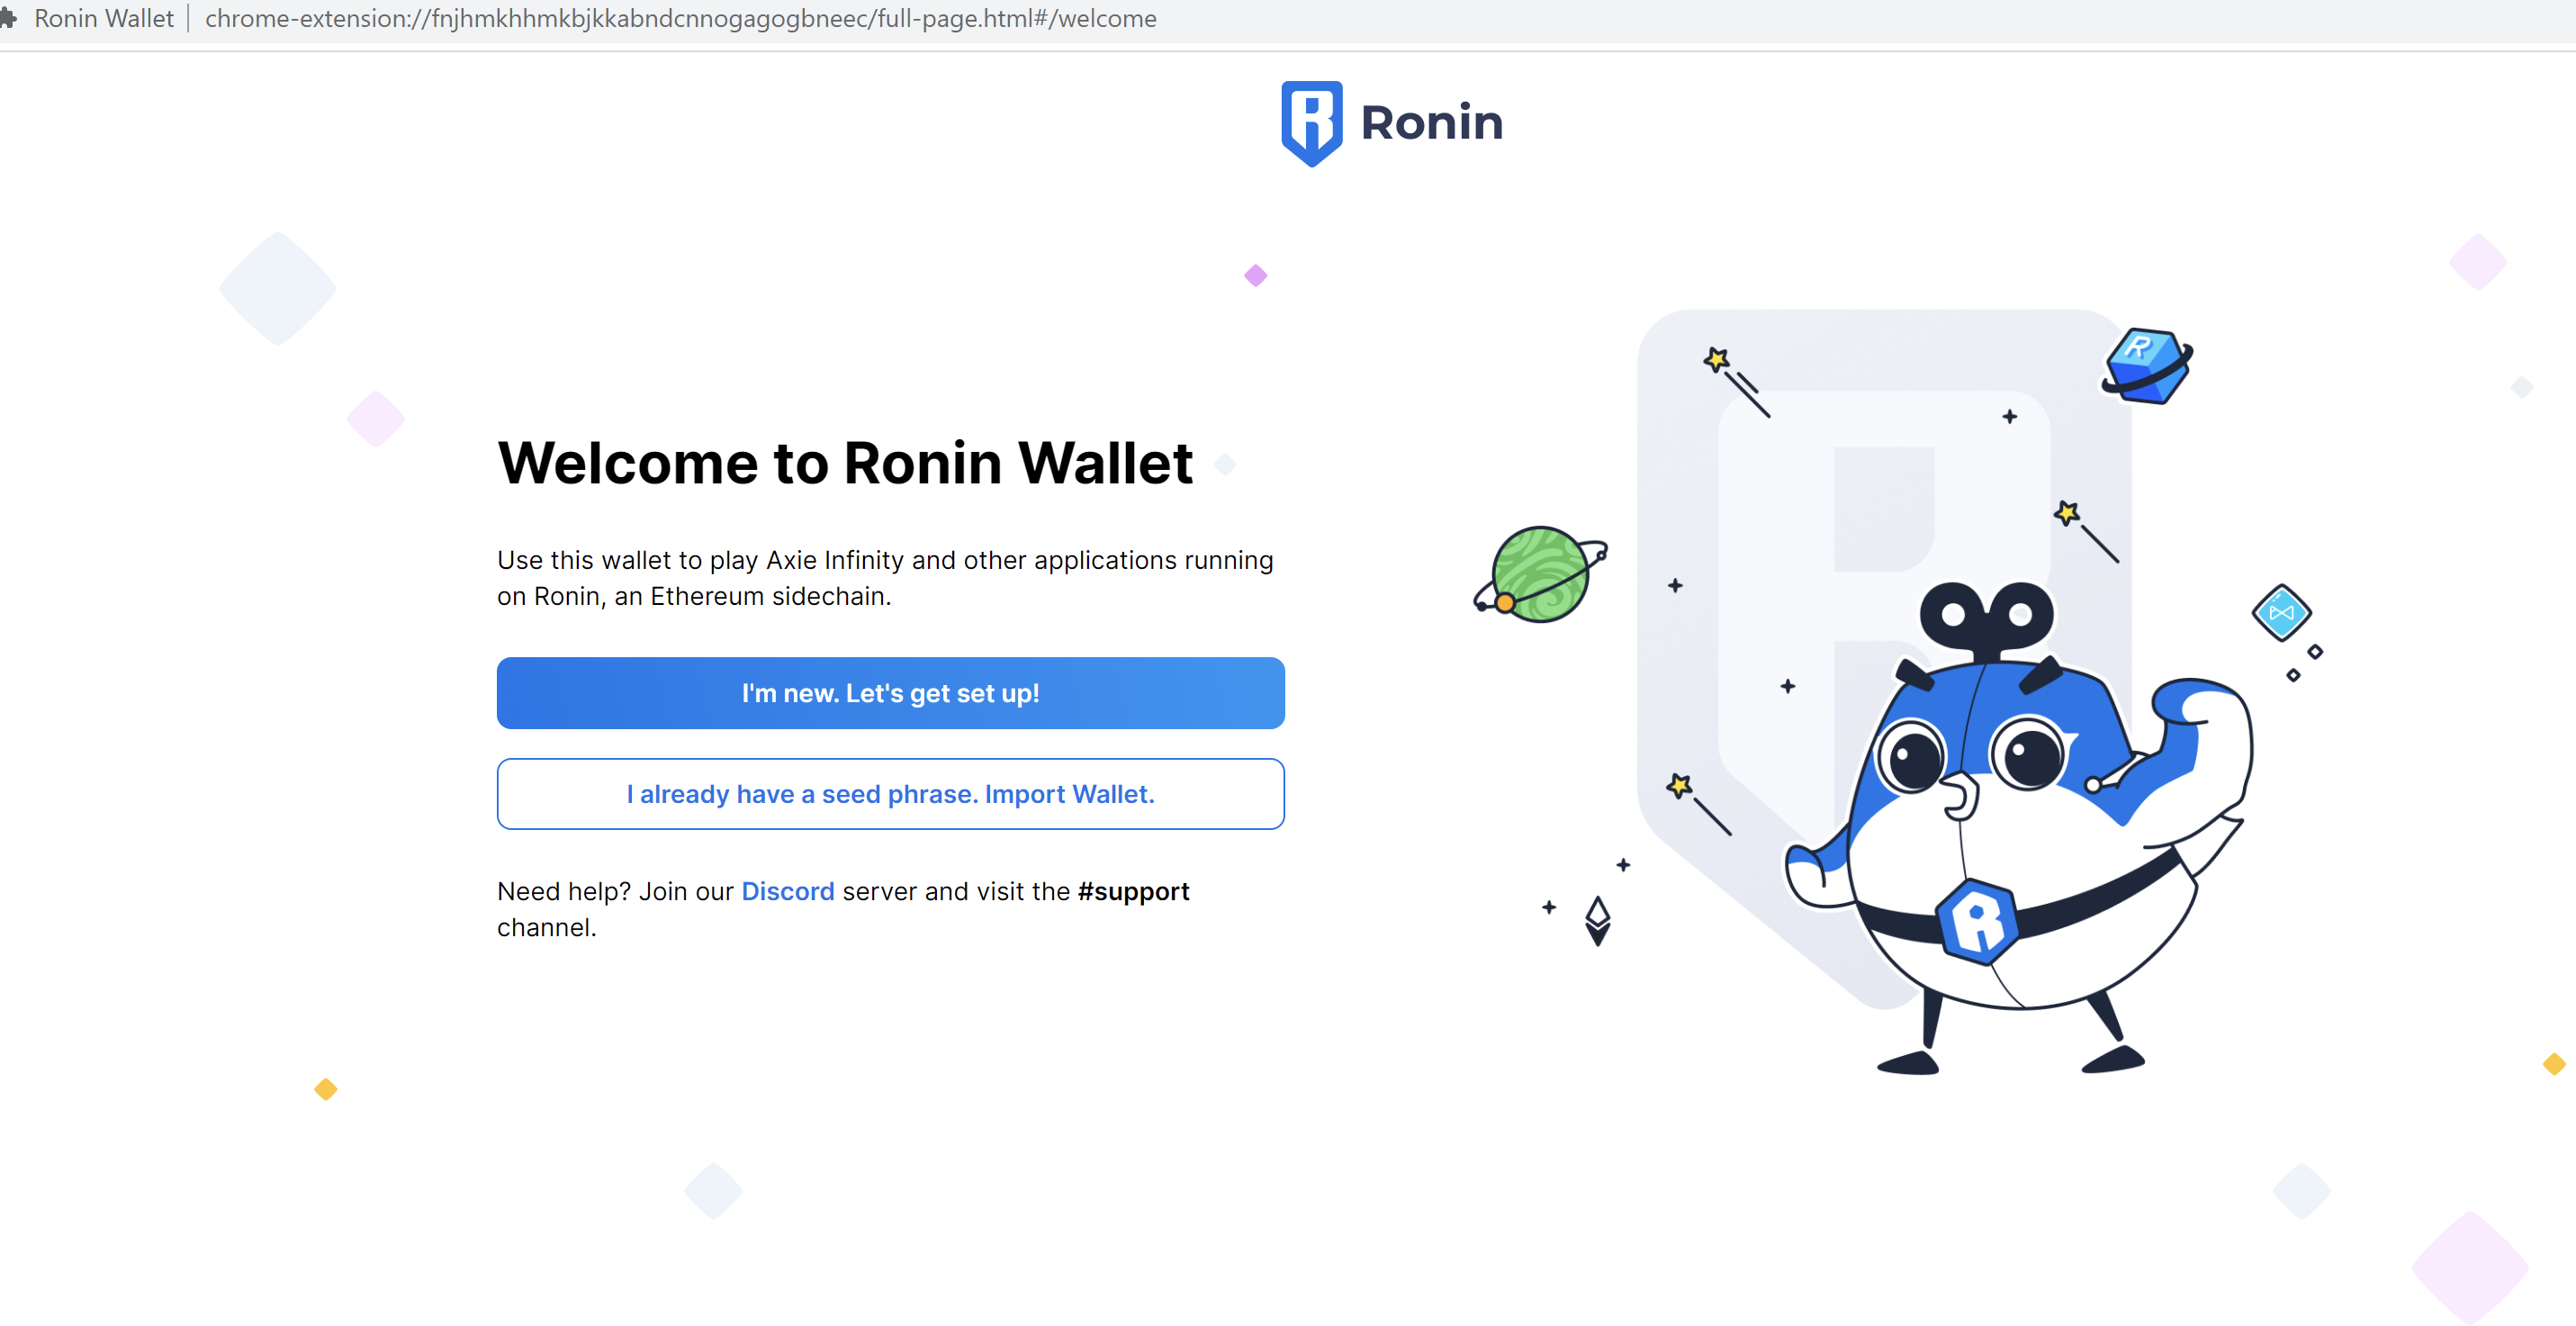 Legitimate Ronin Wallet page